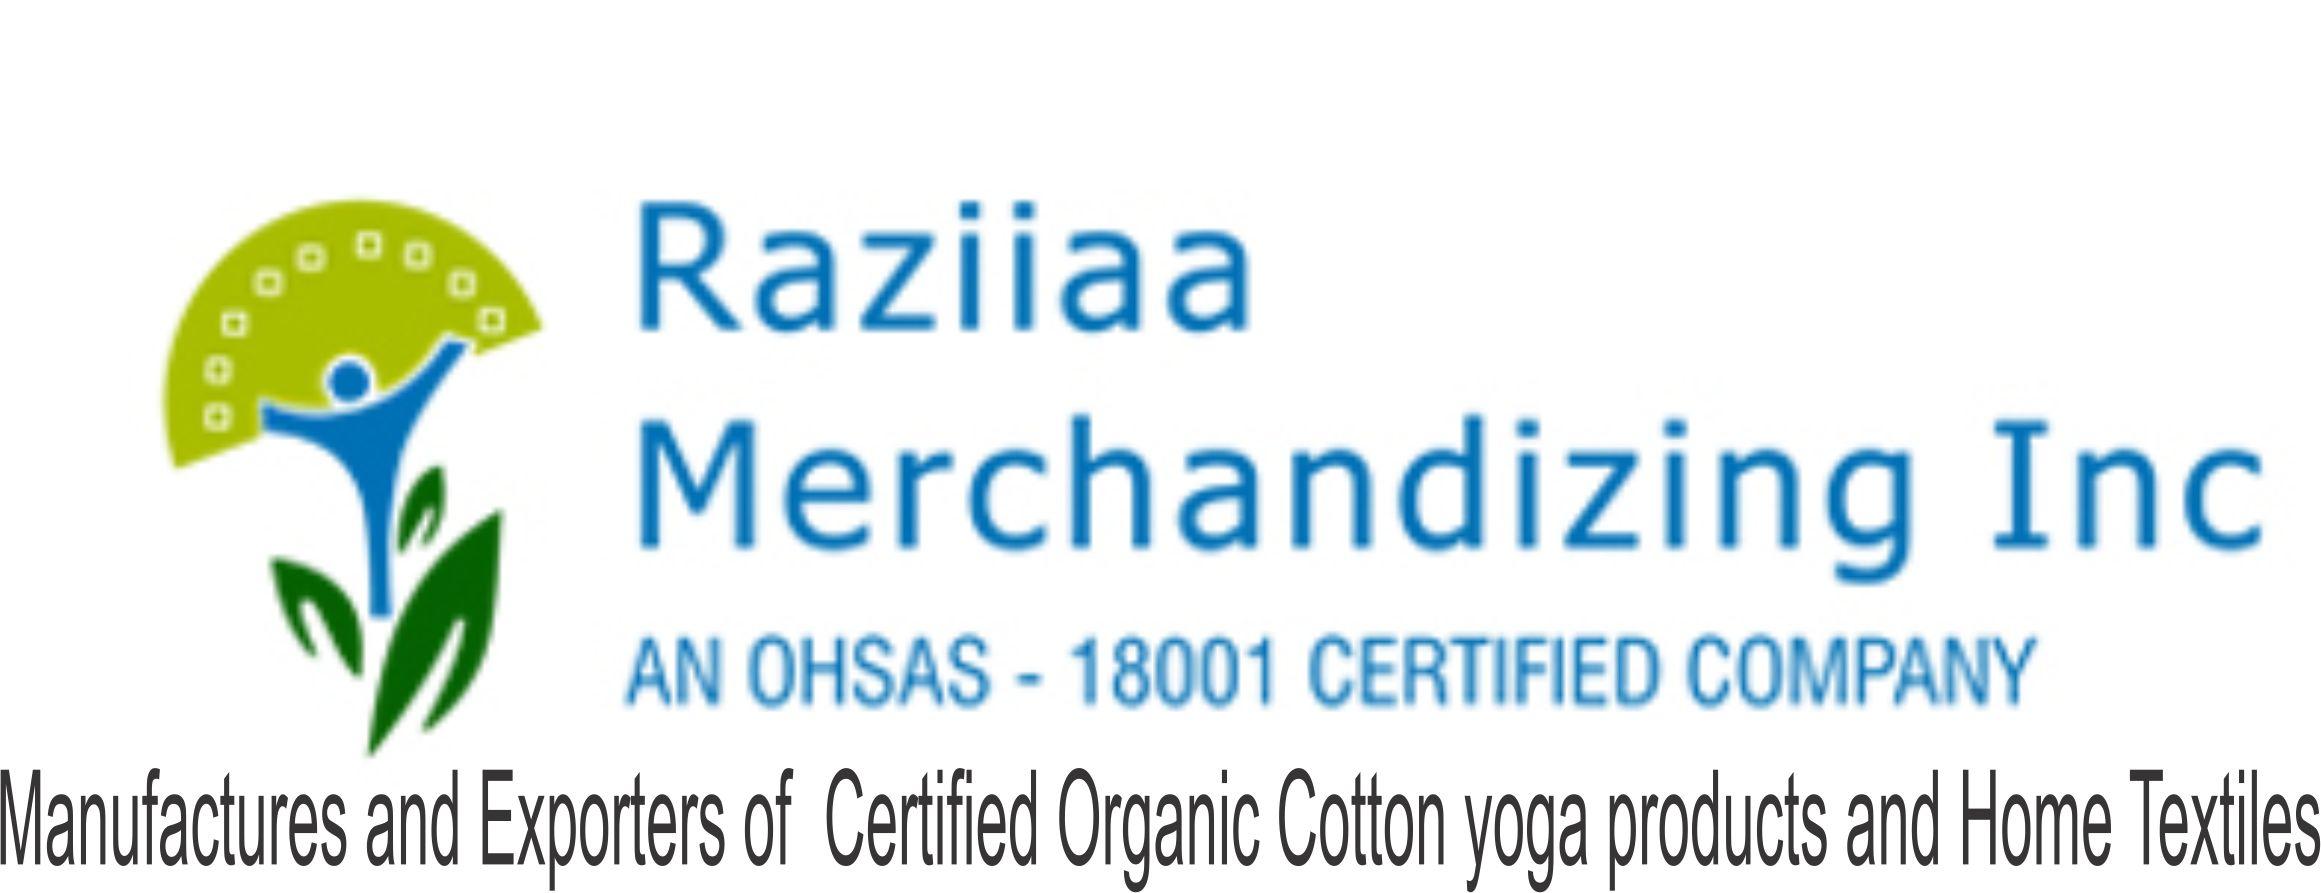 Raziiaa Merchandizing Inc Logo